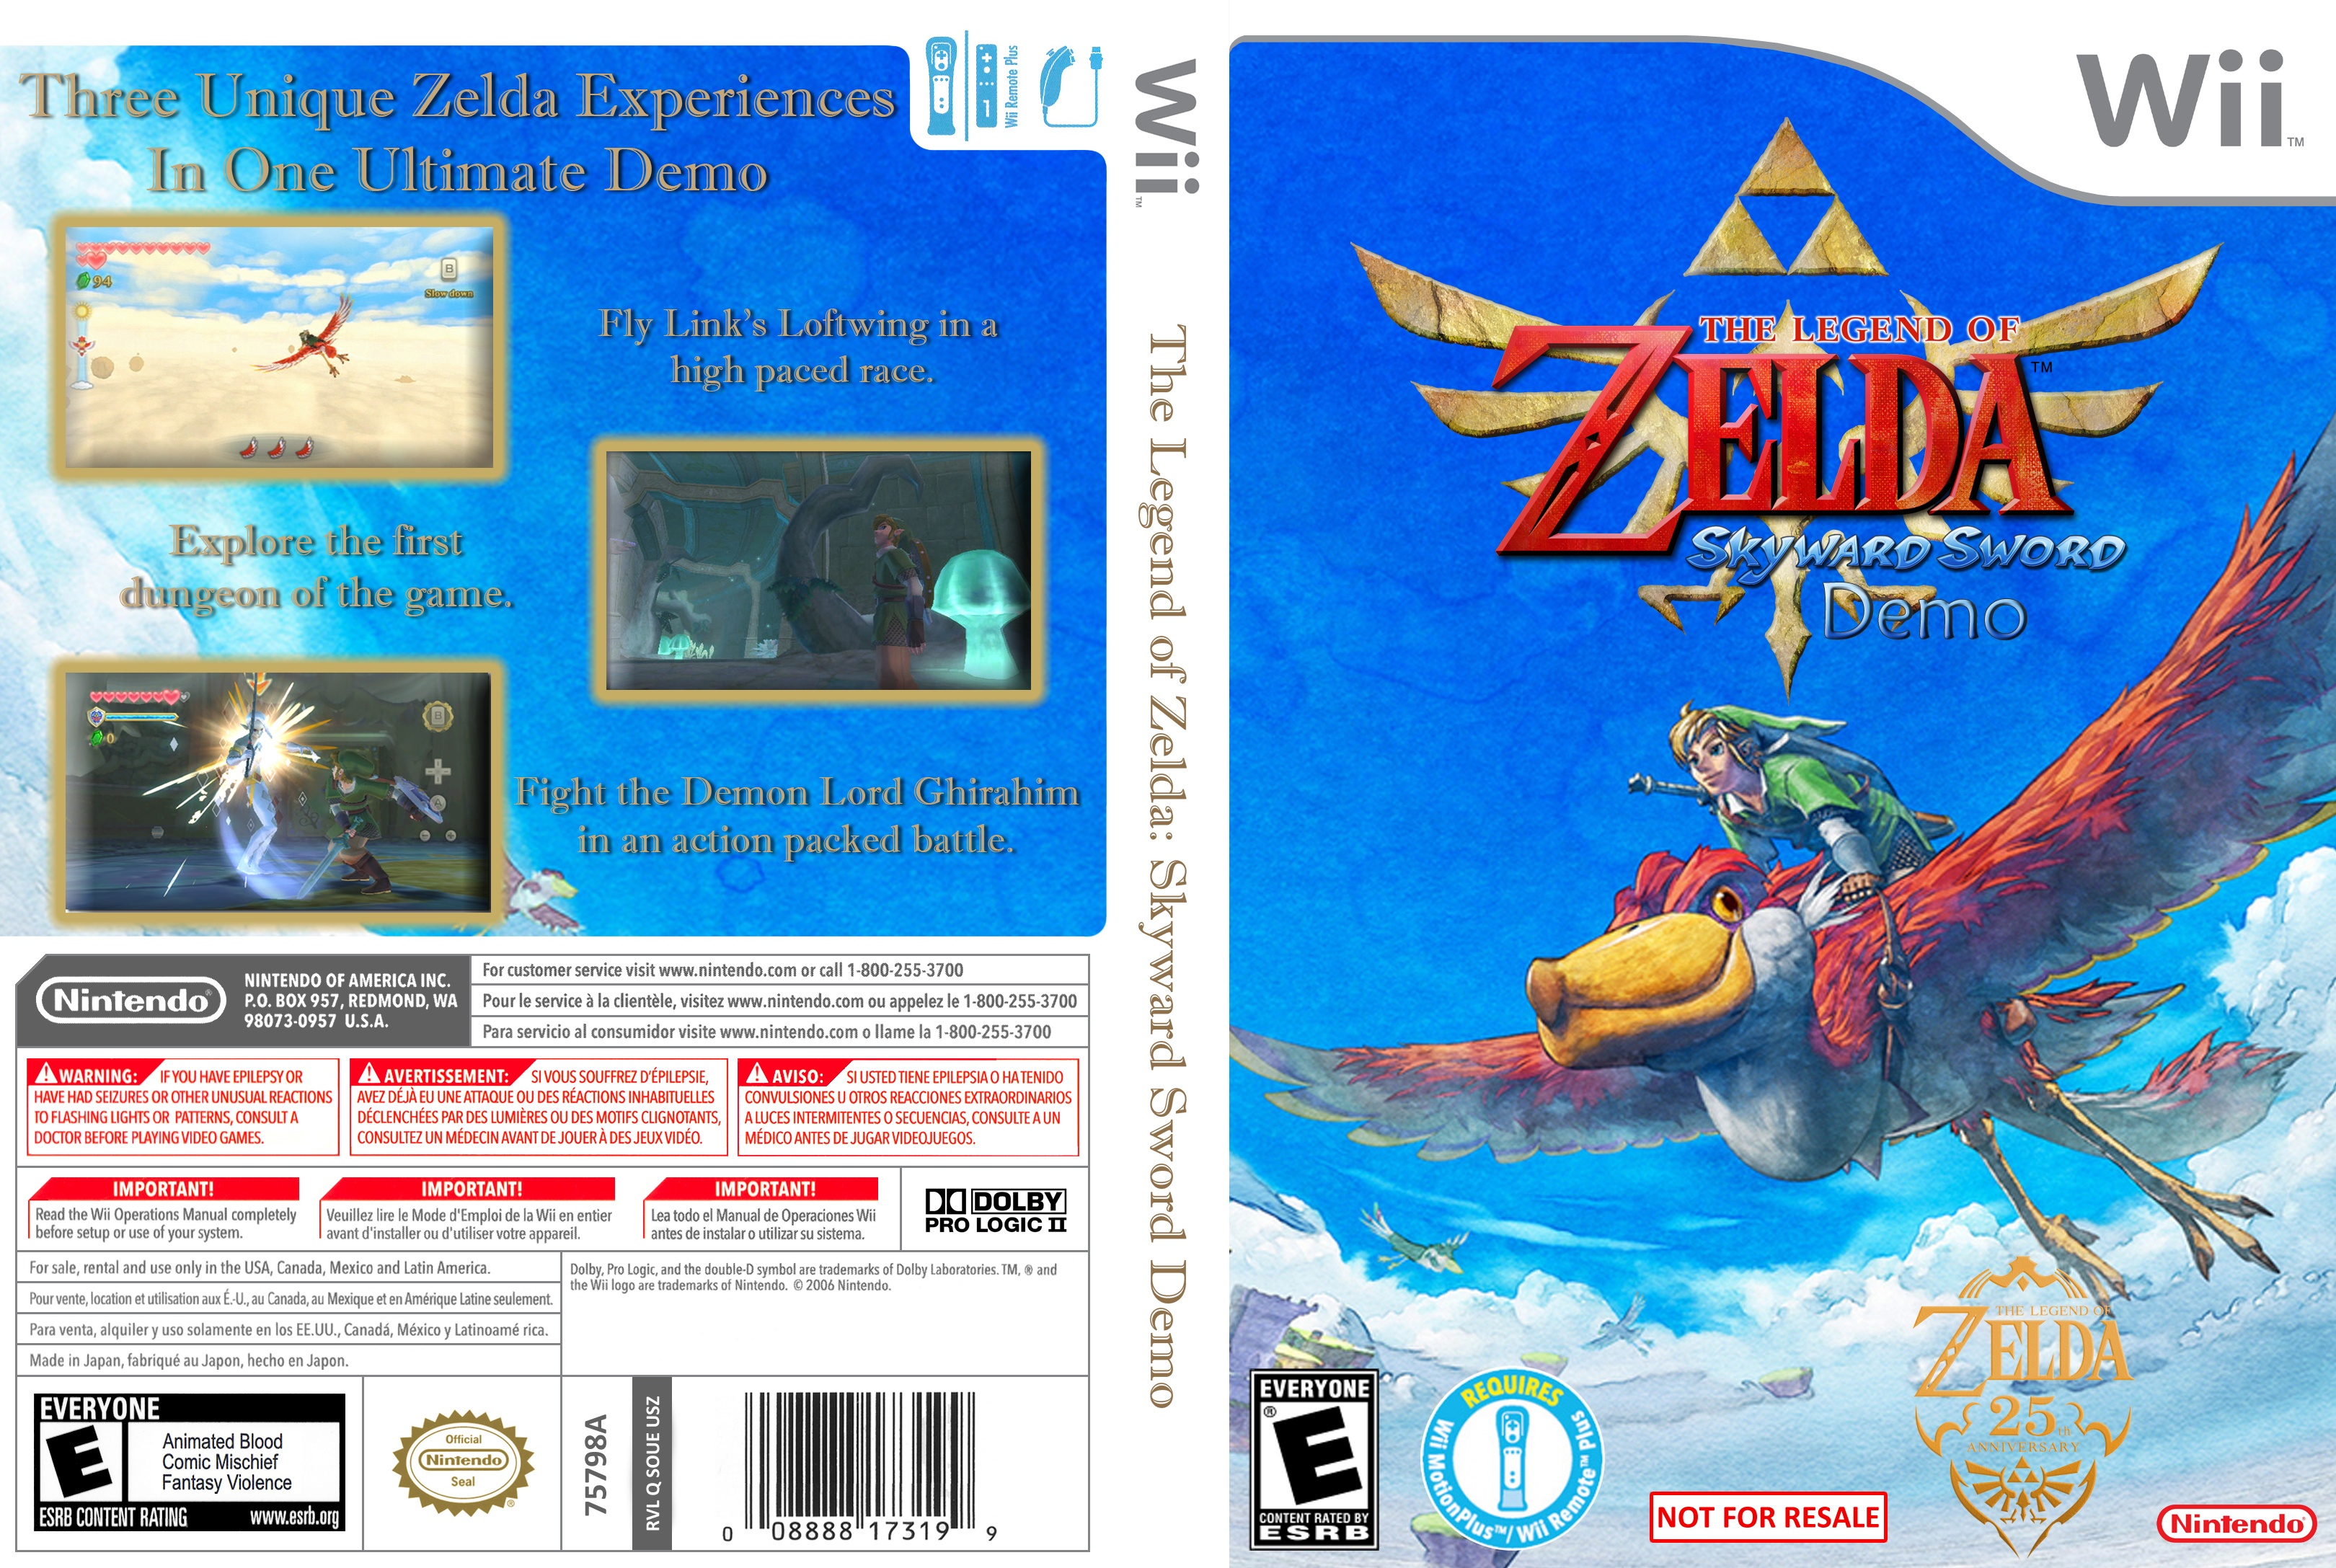 The Legend of Zelda Skyward Sword Retail Demo box cover